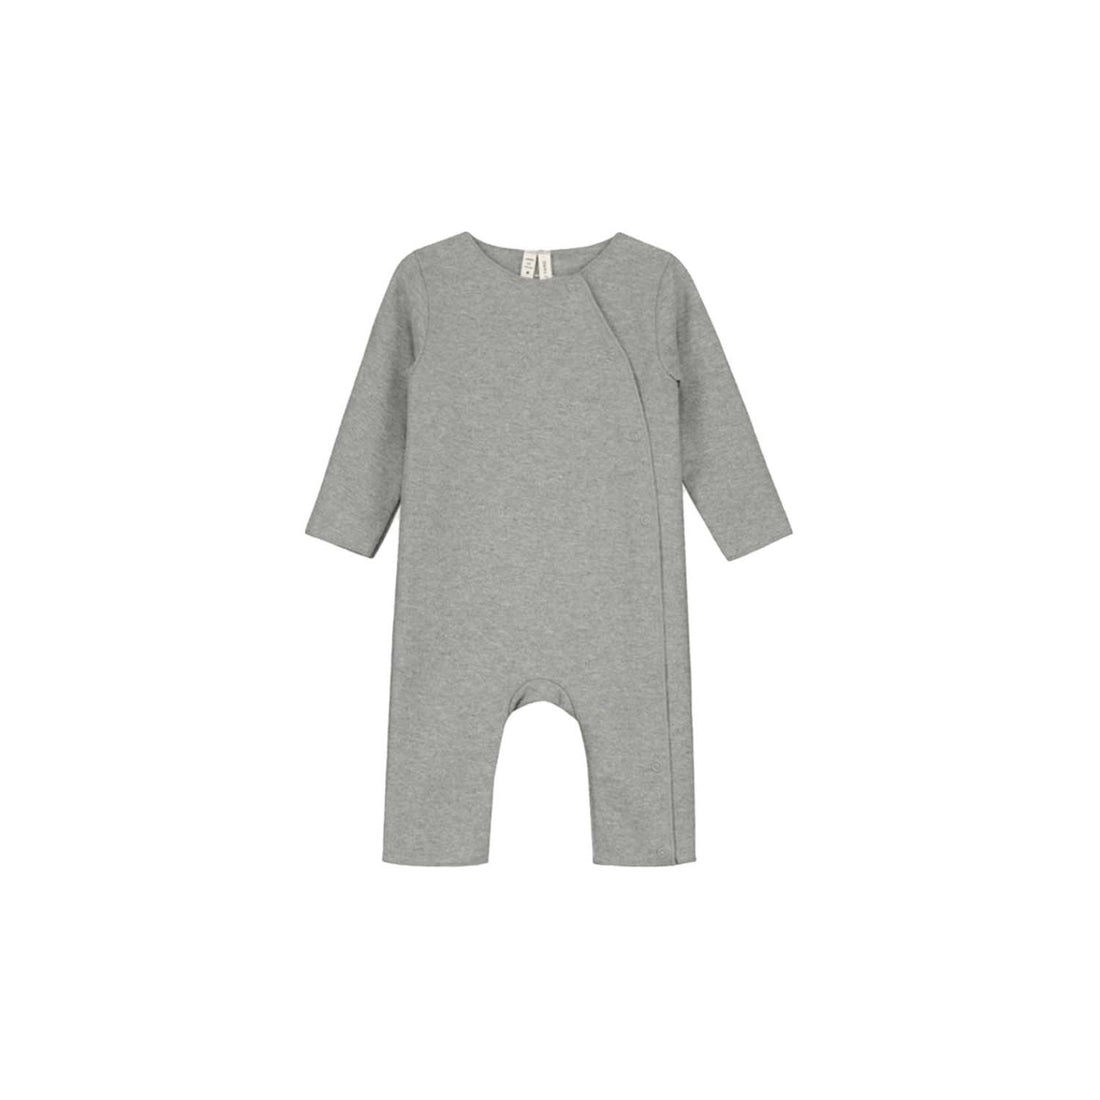 Baby Suit Grey Melange